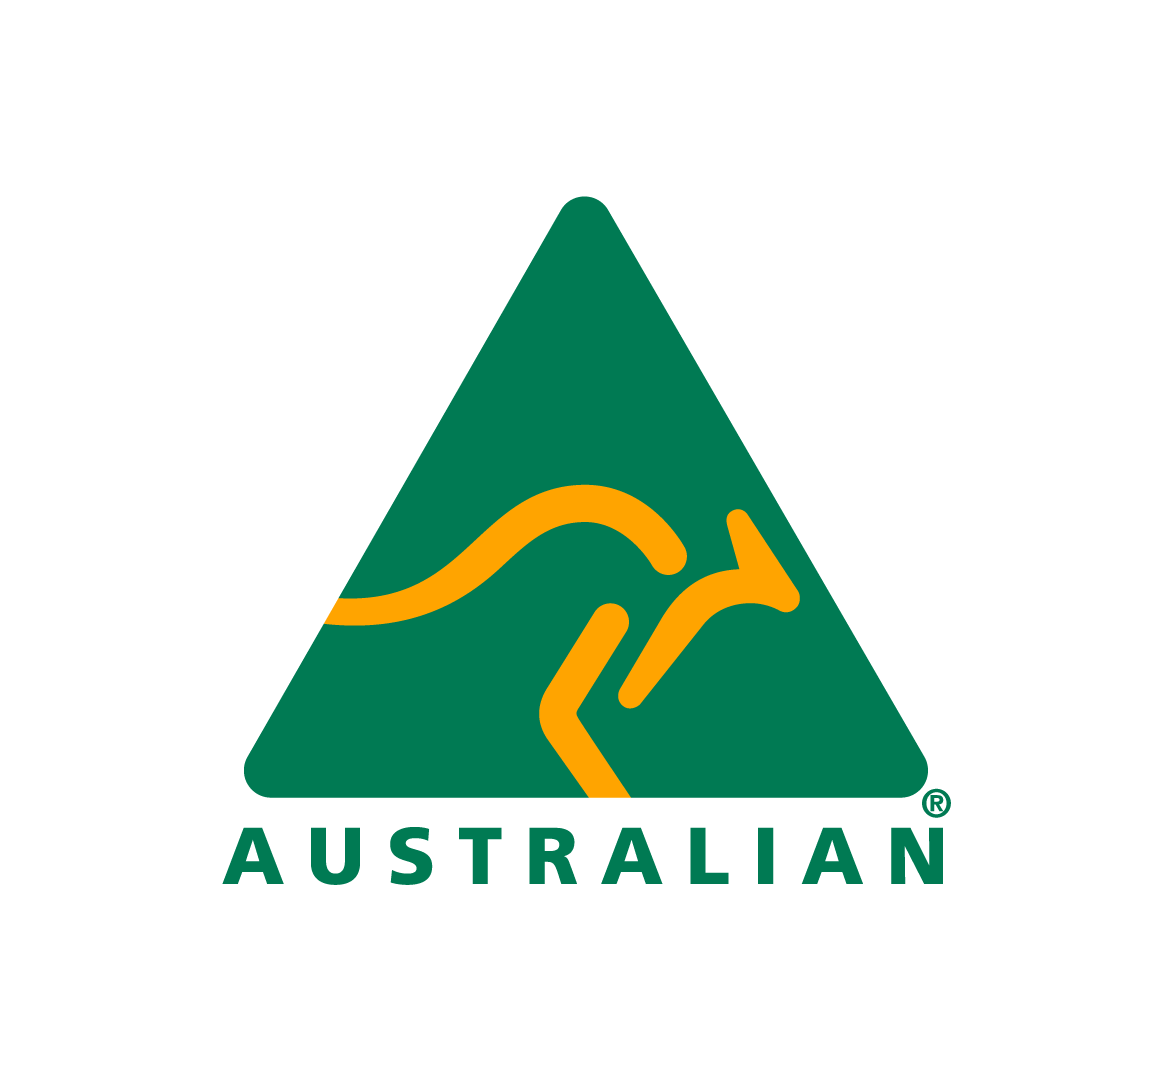 Australian made logo, yellow kangaroo inside green triangle